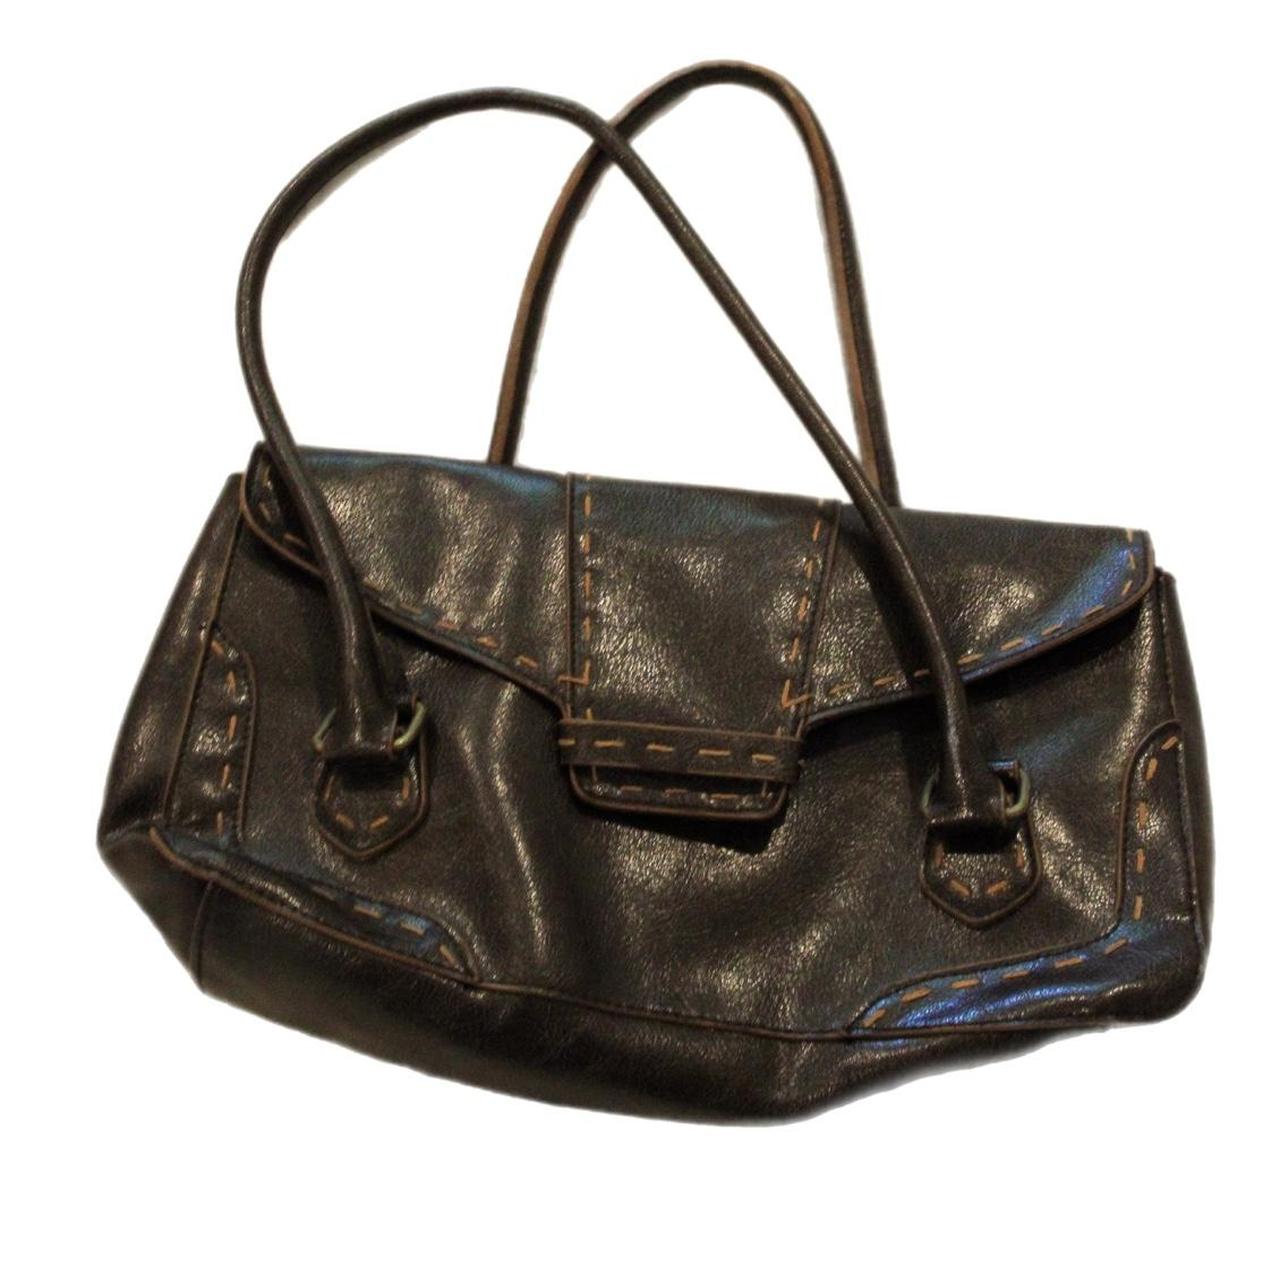 Buy Nodykka Women Tote Bags Top Handle Satchel Handbags PU Pebbled Leather  Tassel Shoulder Purse (one size, Pink4) at Amazon.in